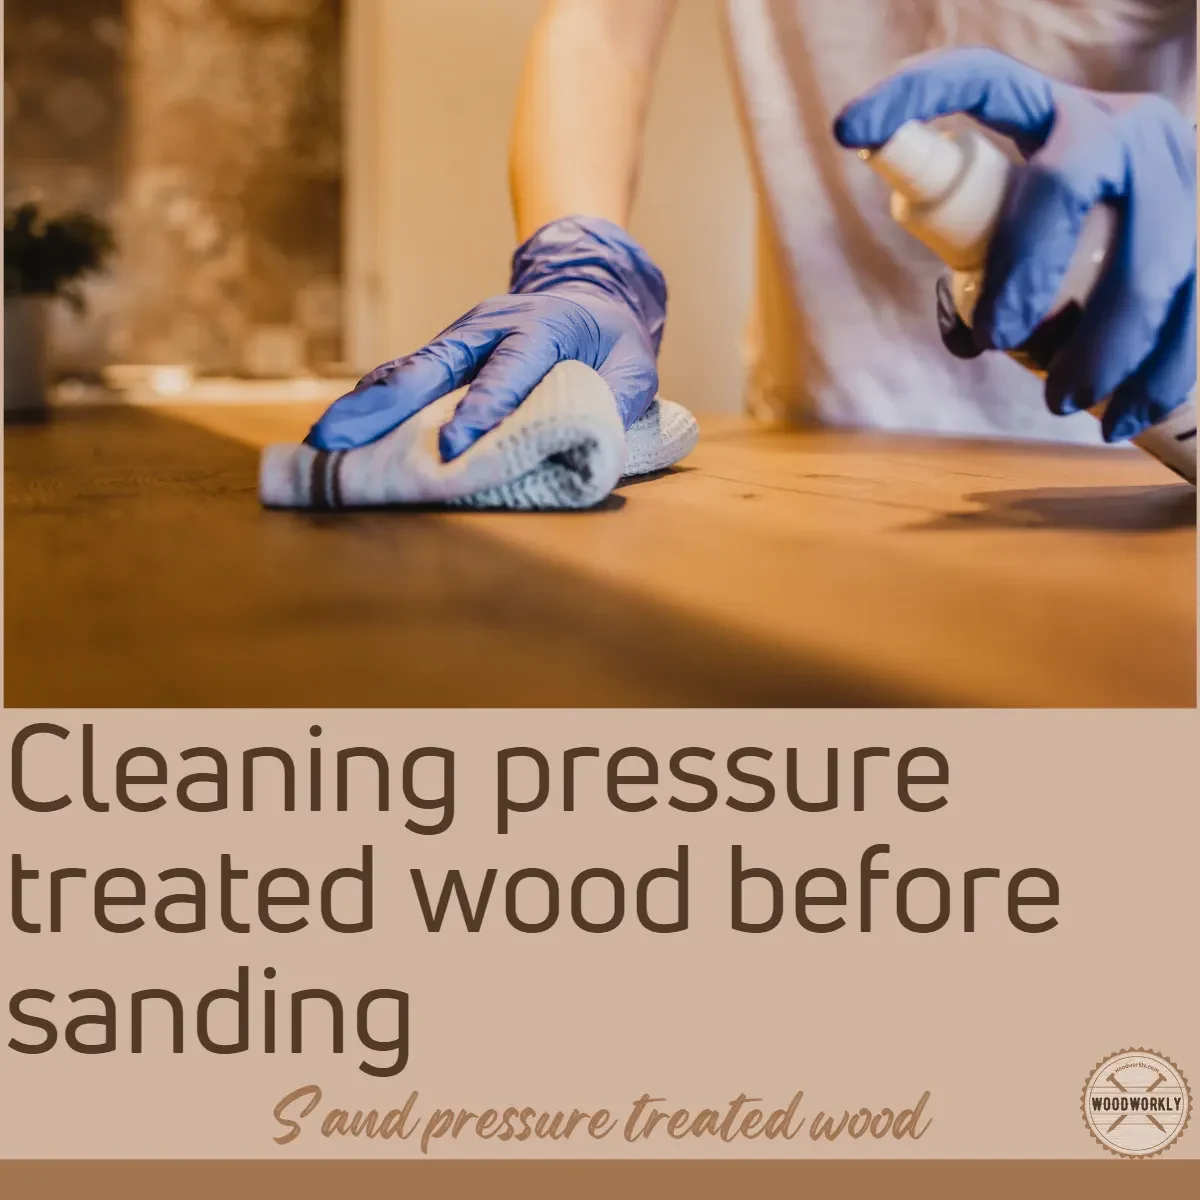 Cleaning pressure treated wood before sanding